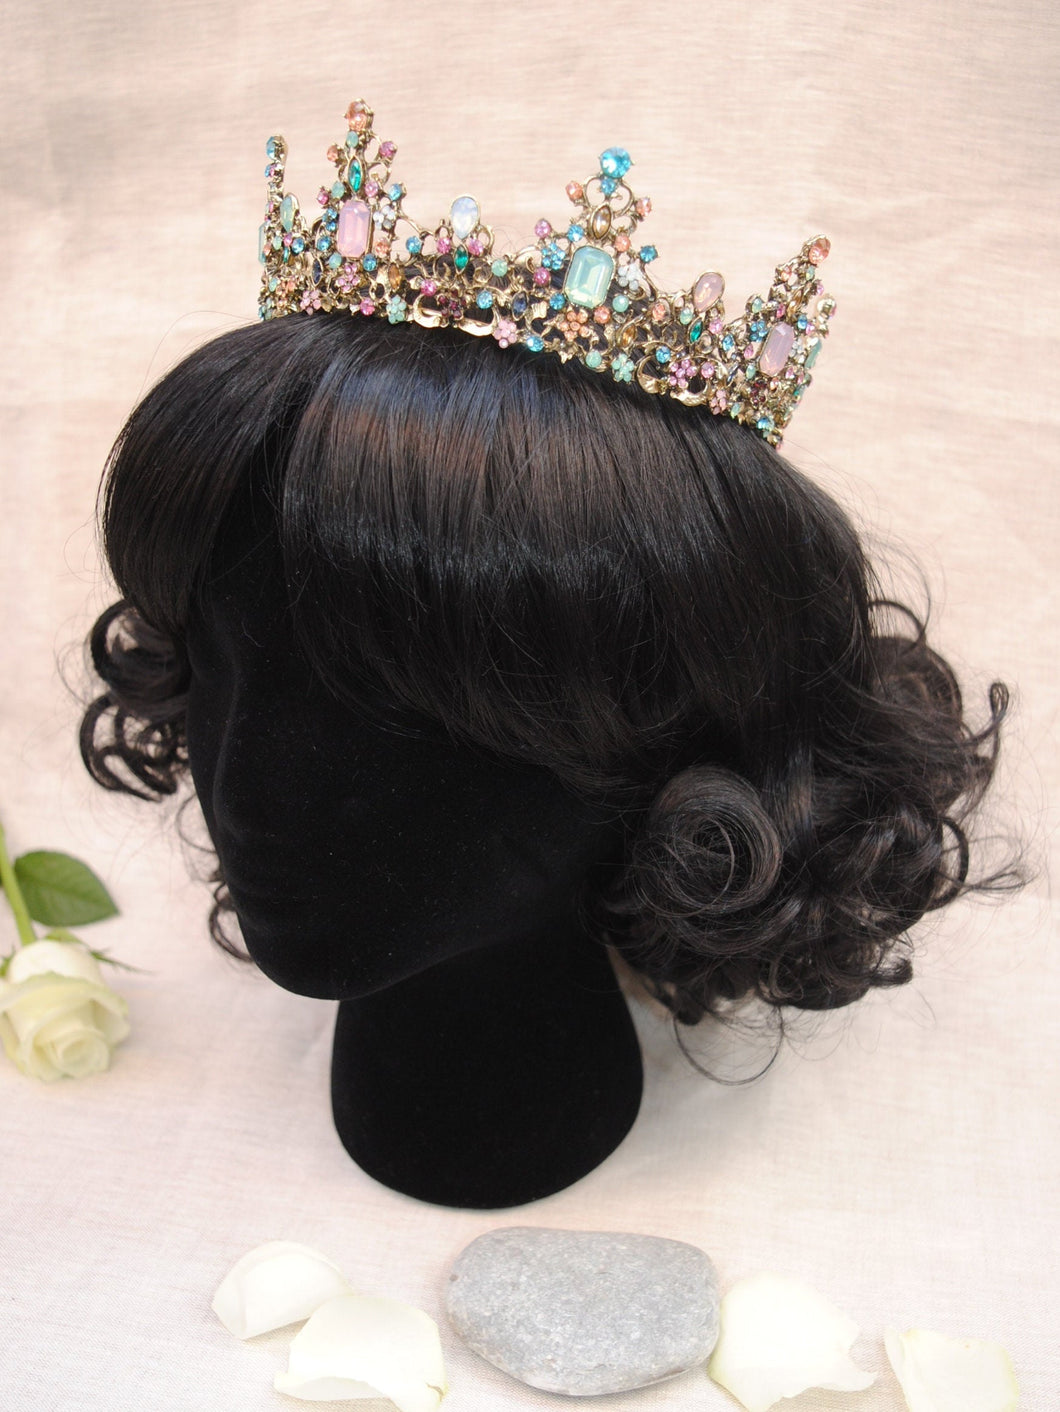 Sleeping Beauty Wedding Crown - Princess Aurora